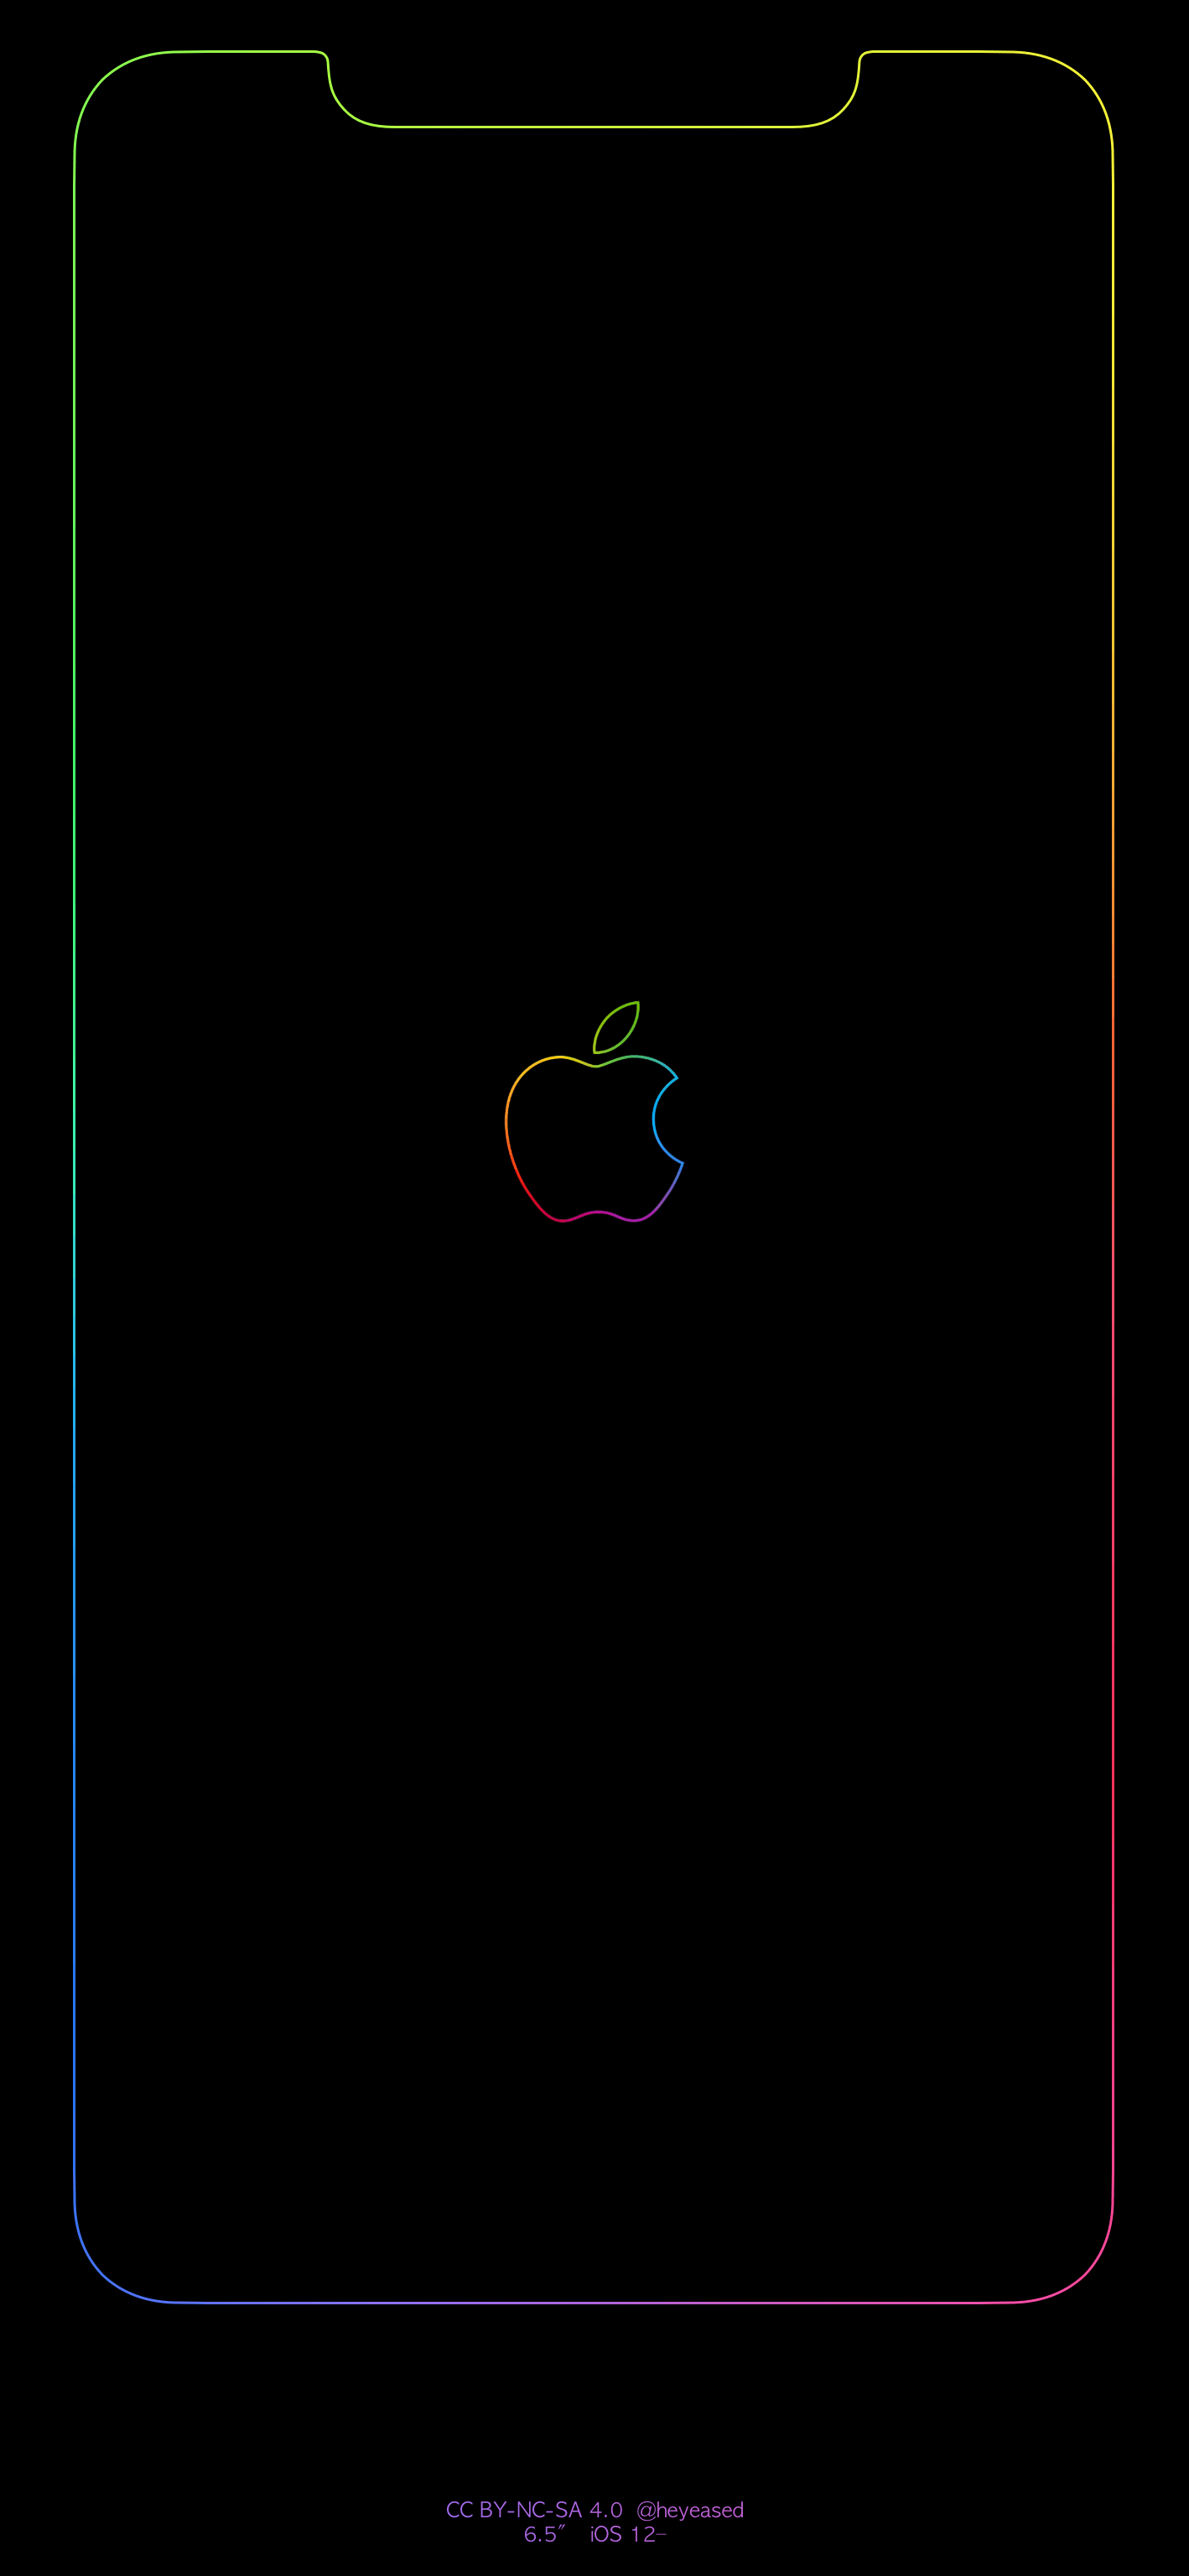 iPhone Apple Logo - XS Max rainbow border & apple logo : iphone